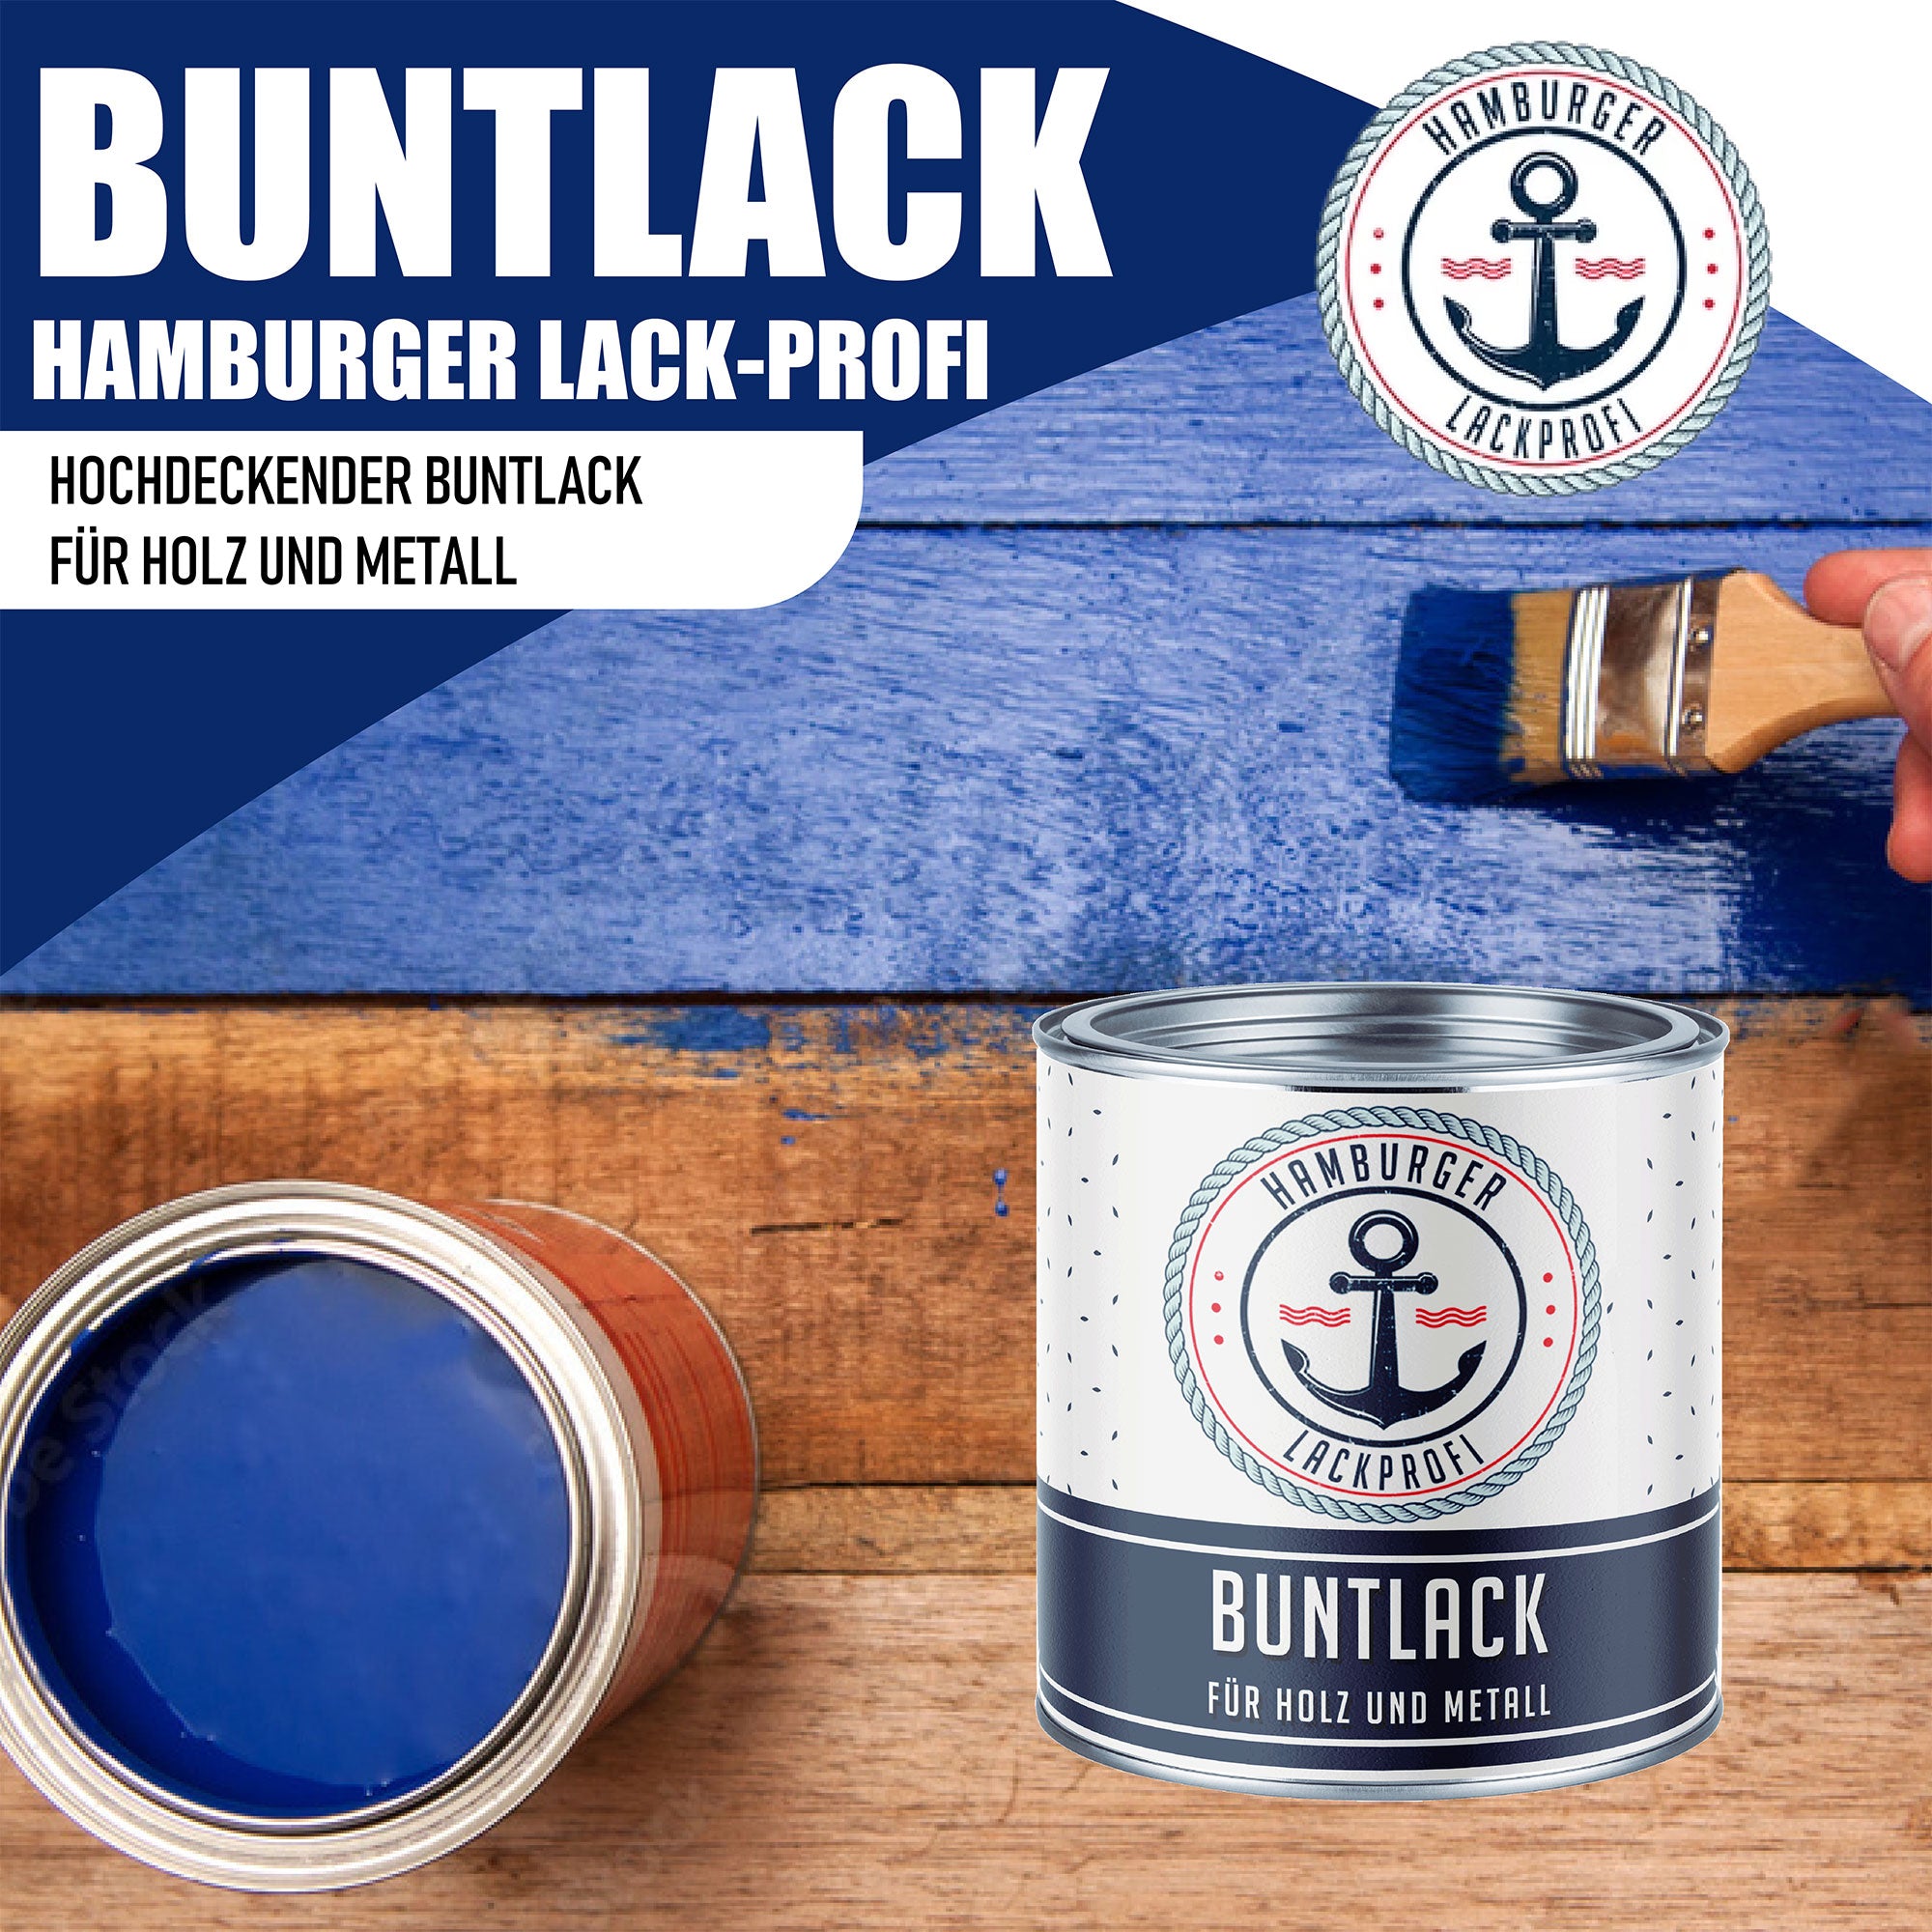 Hamburger Lack-Profi Buntlack Mahagonibraun RAL 8016 - Robuster Kunstharzlack